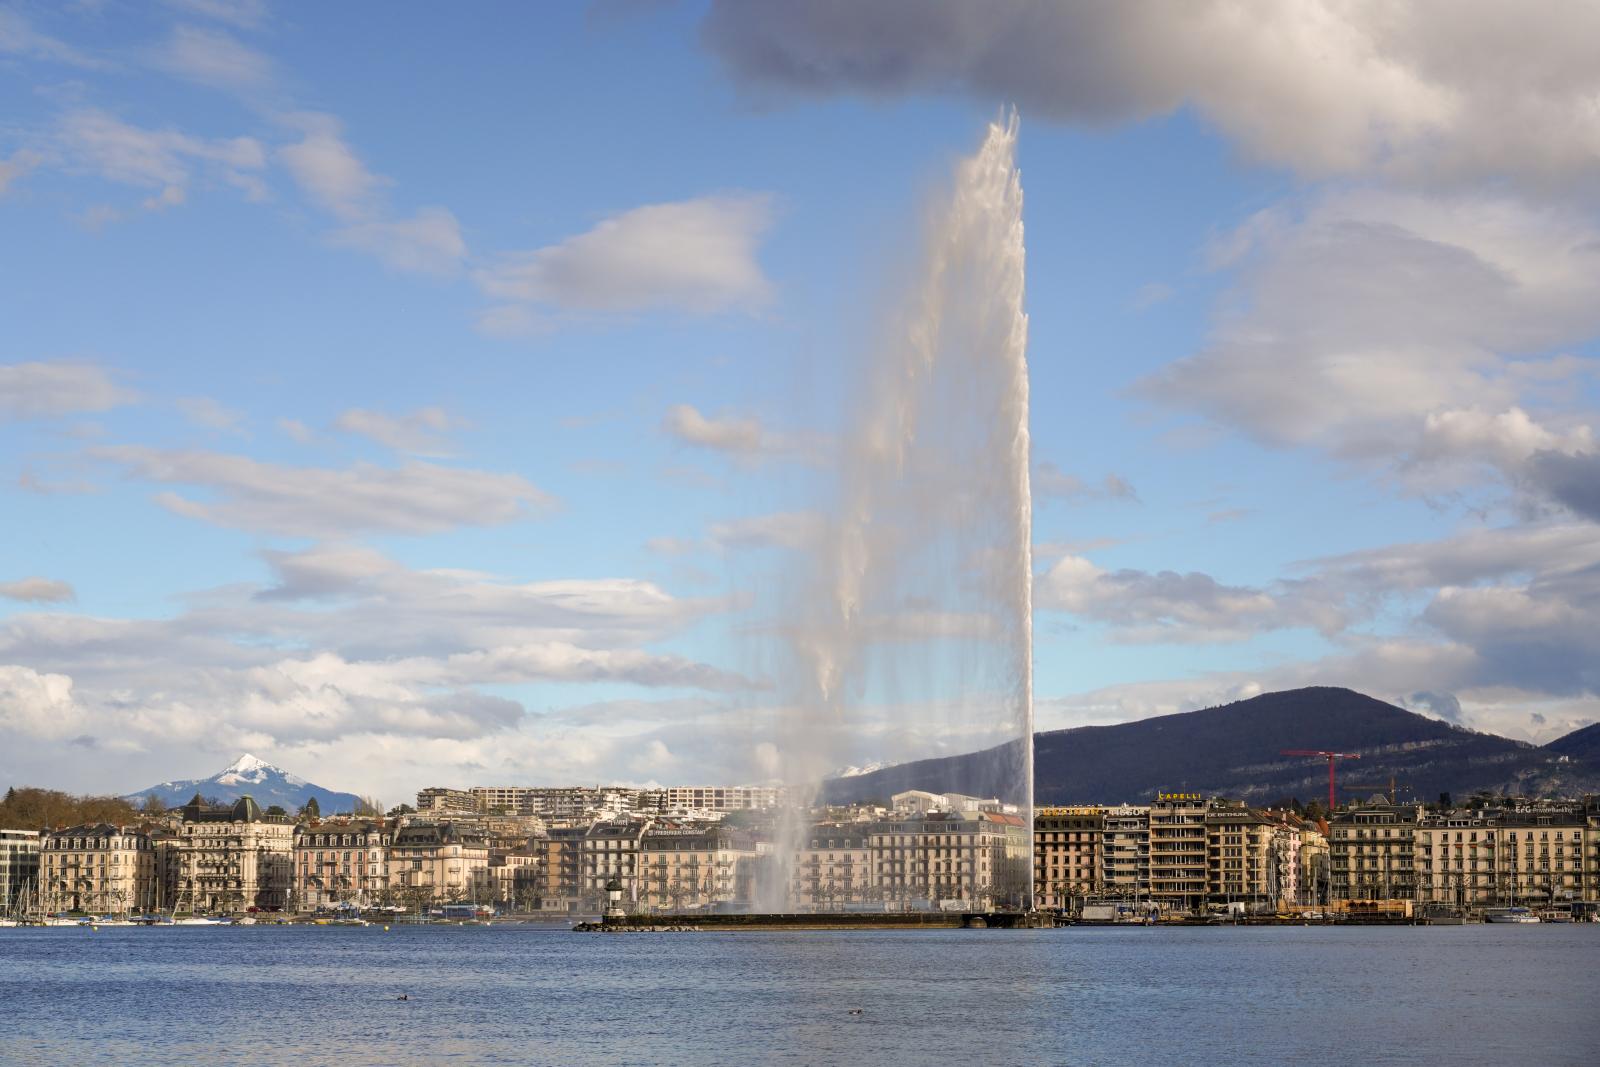 Jet d'eau | Jet of water. Landmark of the city of Geneva | Buy this image